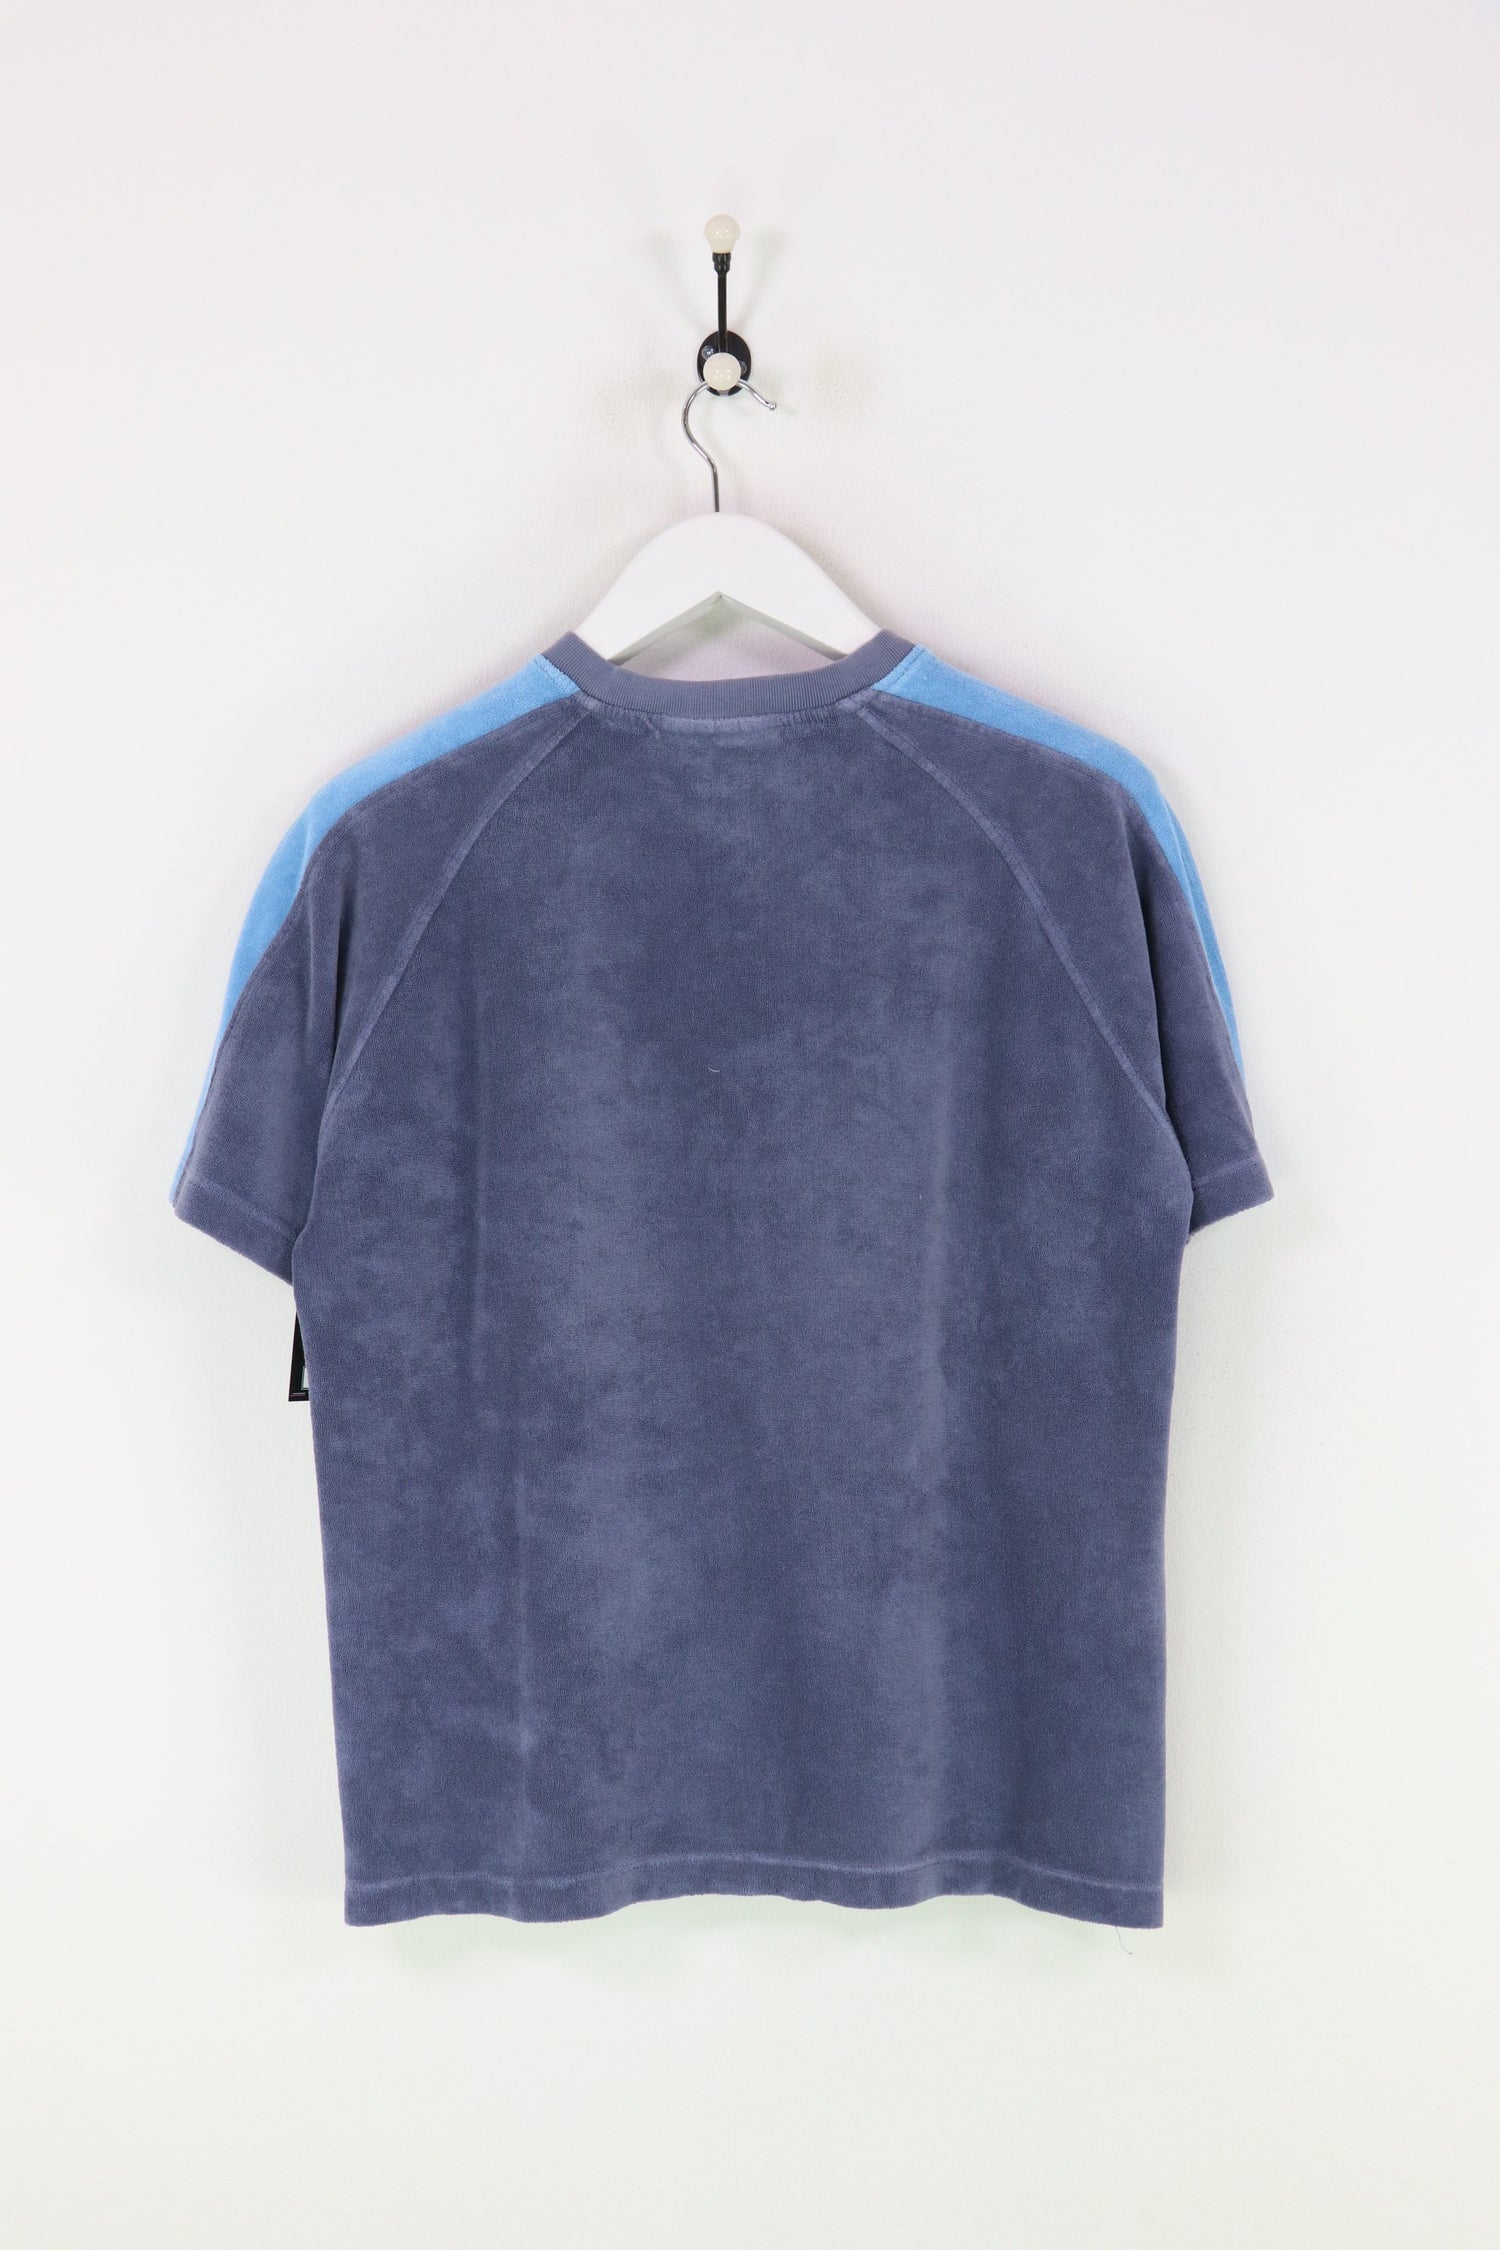 Kappa Crushed Velvet T-shirt Blue Small